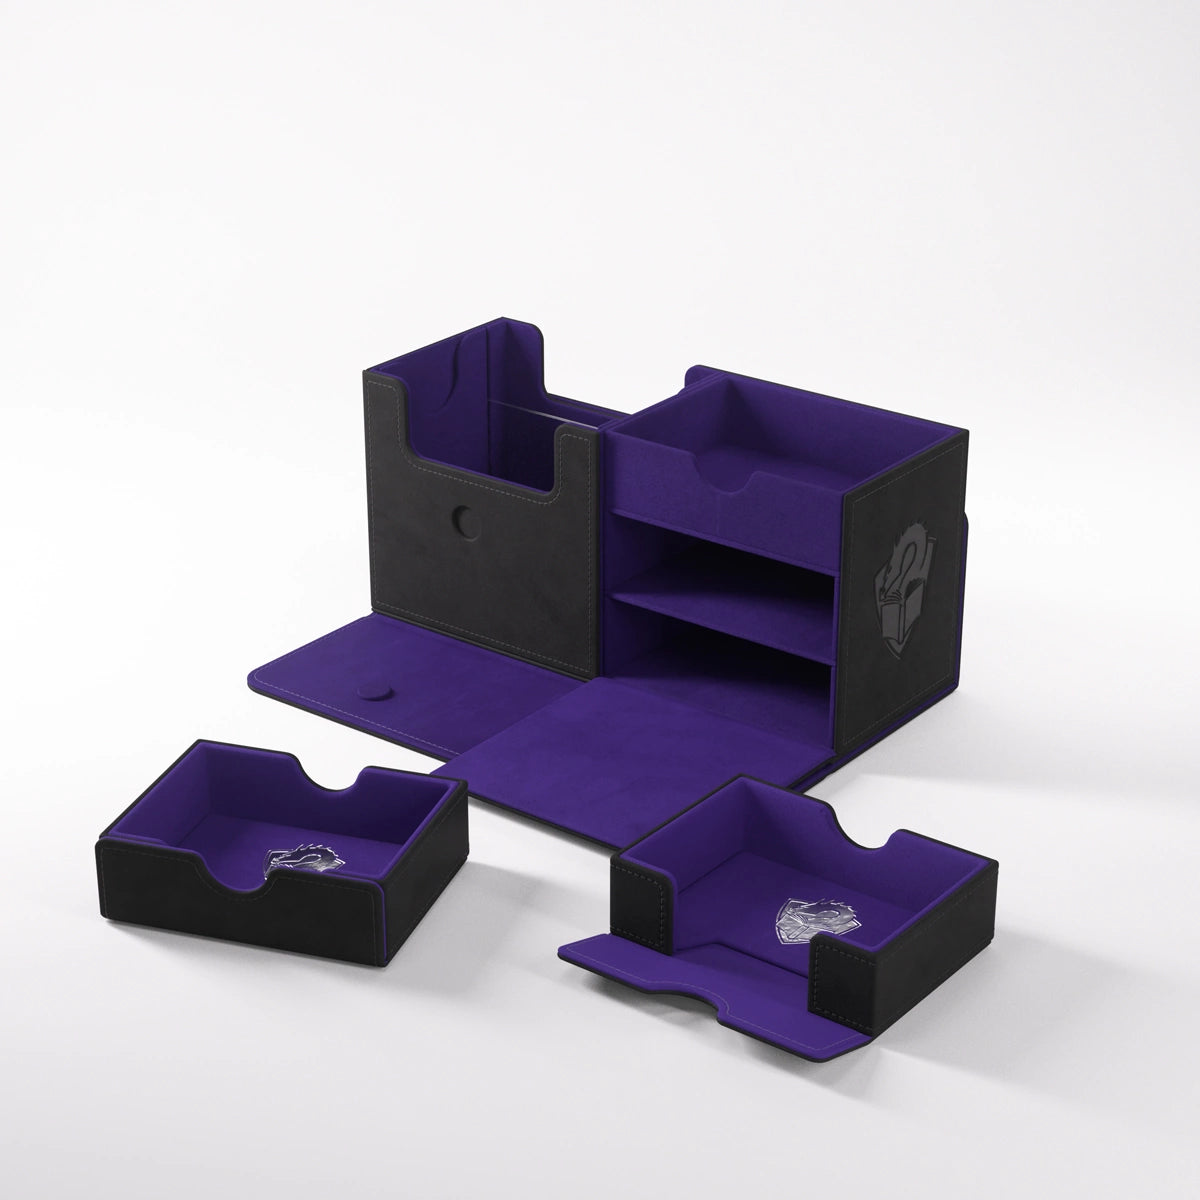 Deck Box: The Academic 133+ XL Black/Purple Tolarian Edition